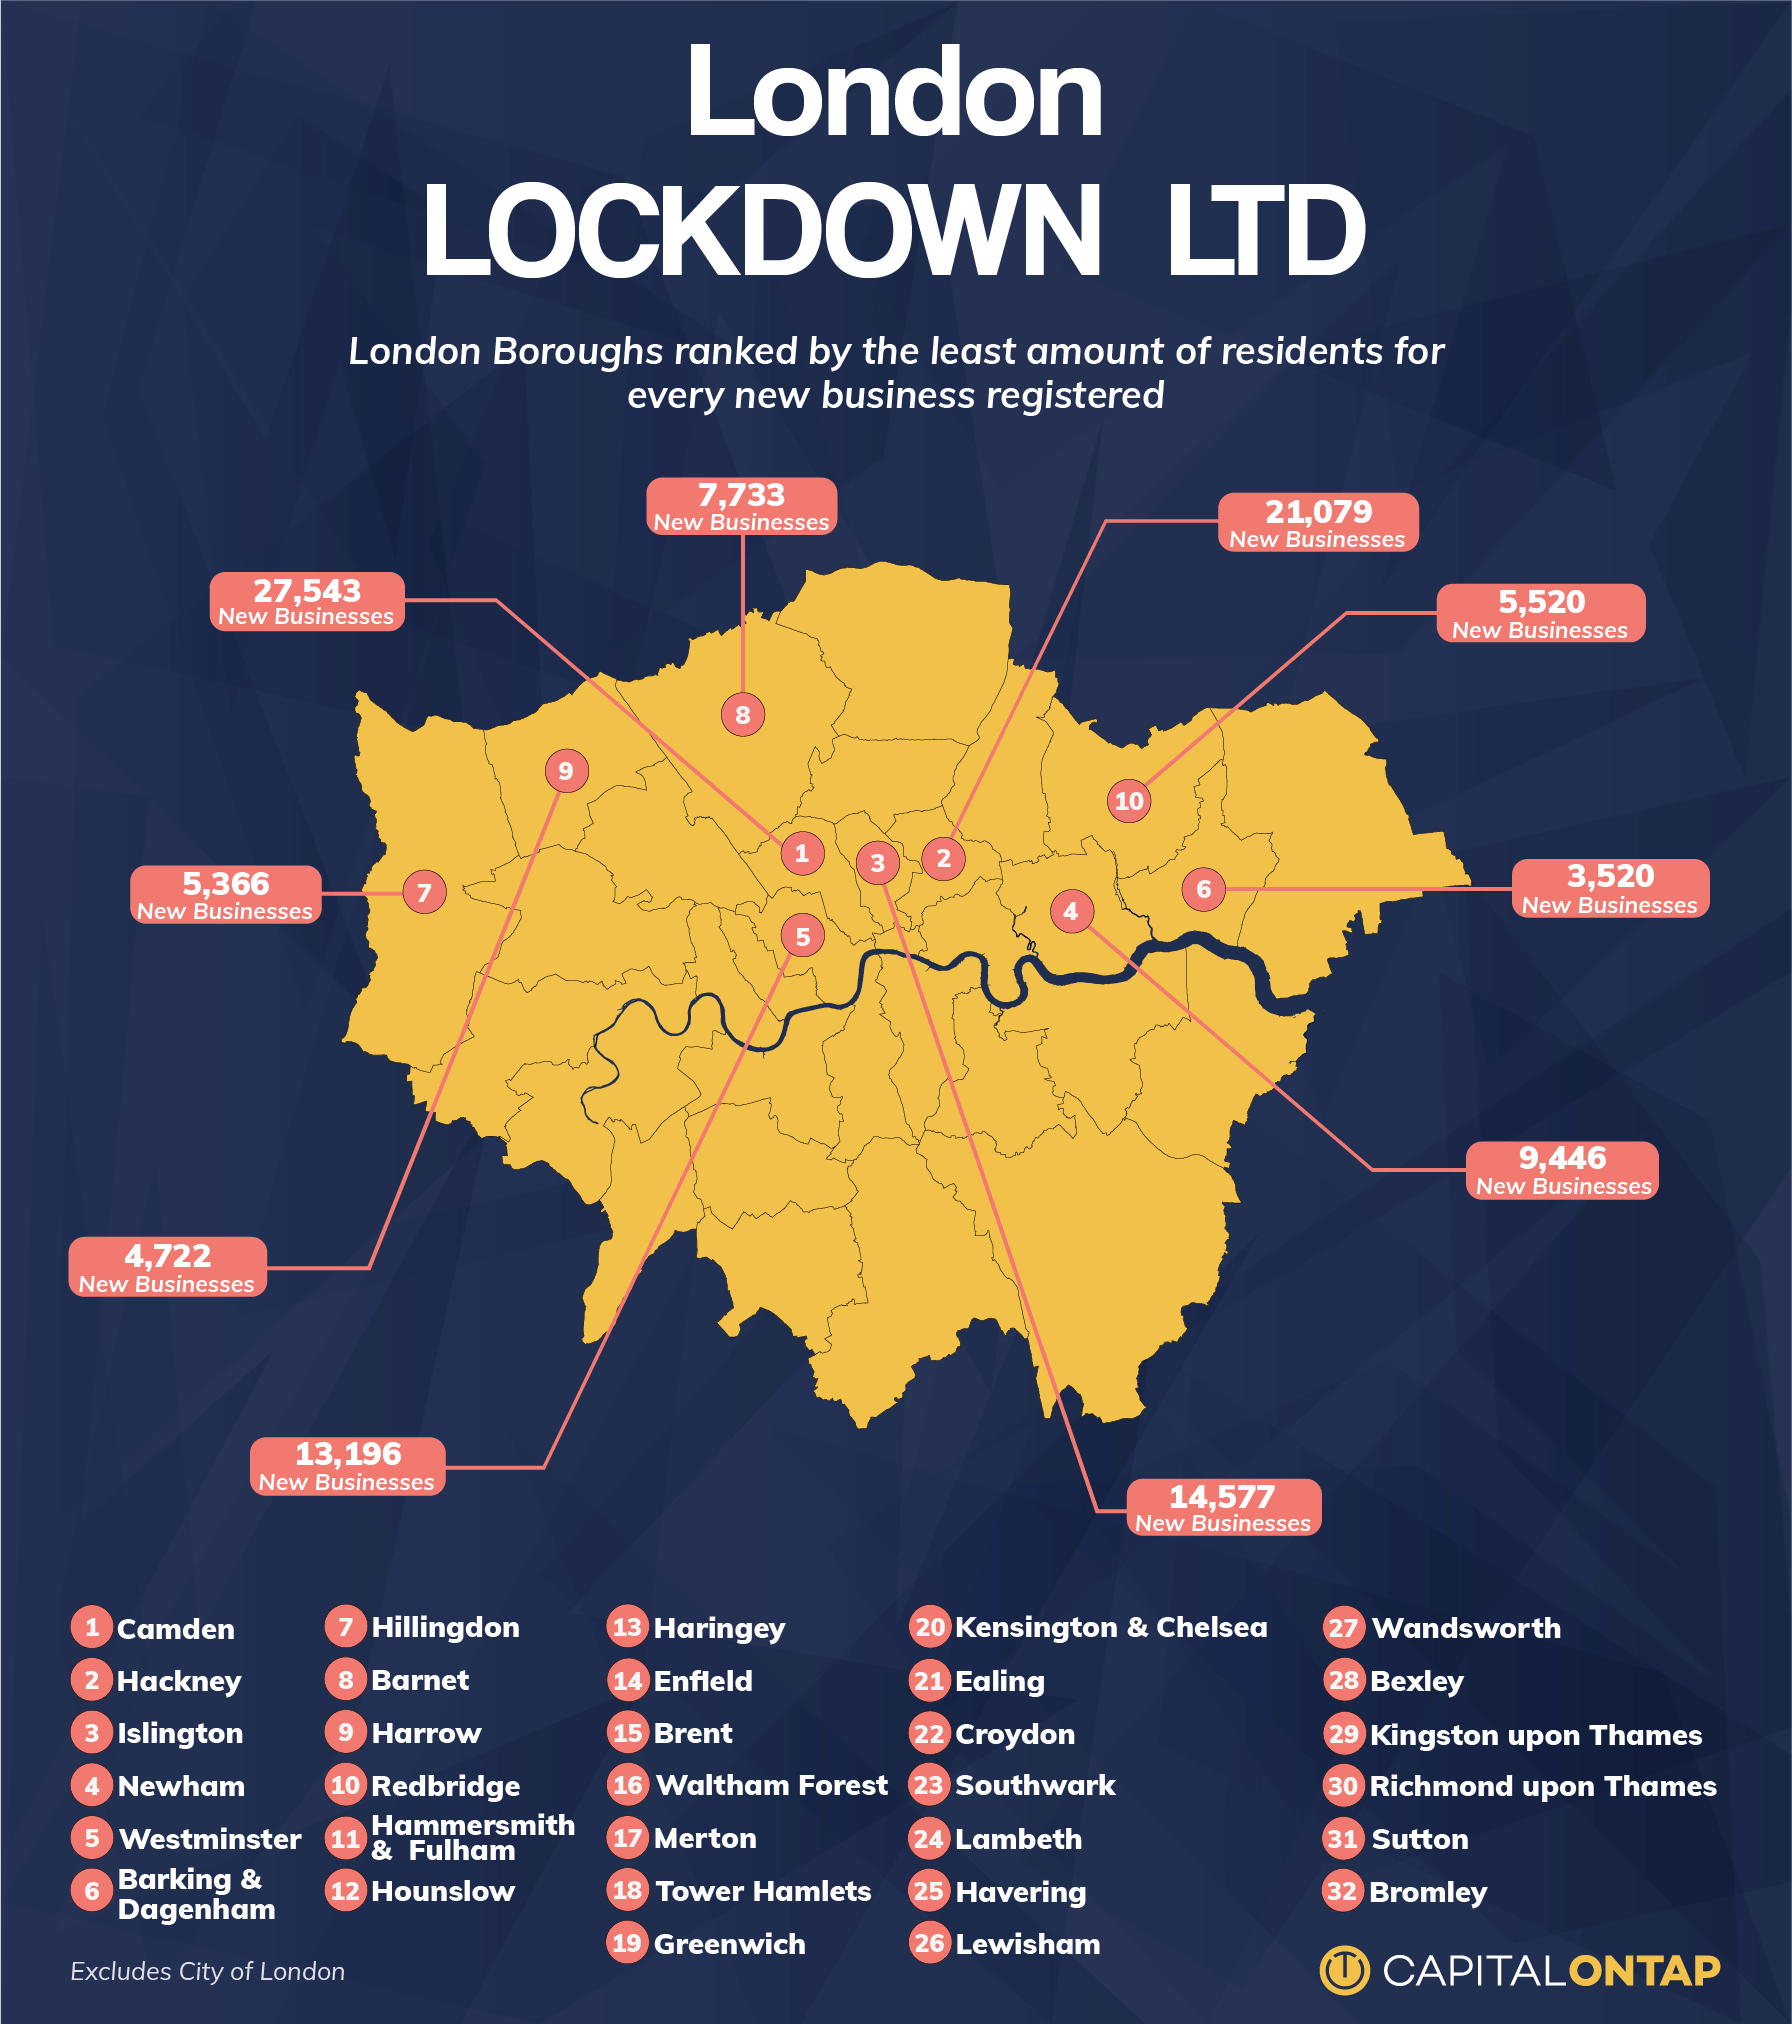 Lockdown LTD - where are entrepreneurs taking the leap despite uncertain times?